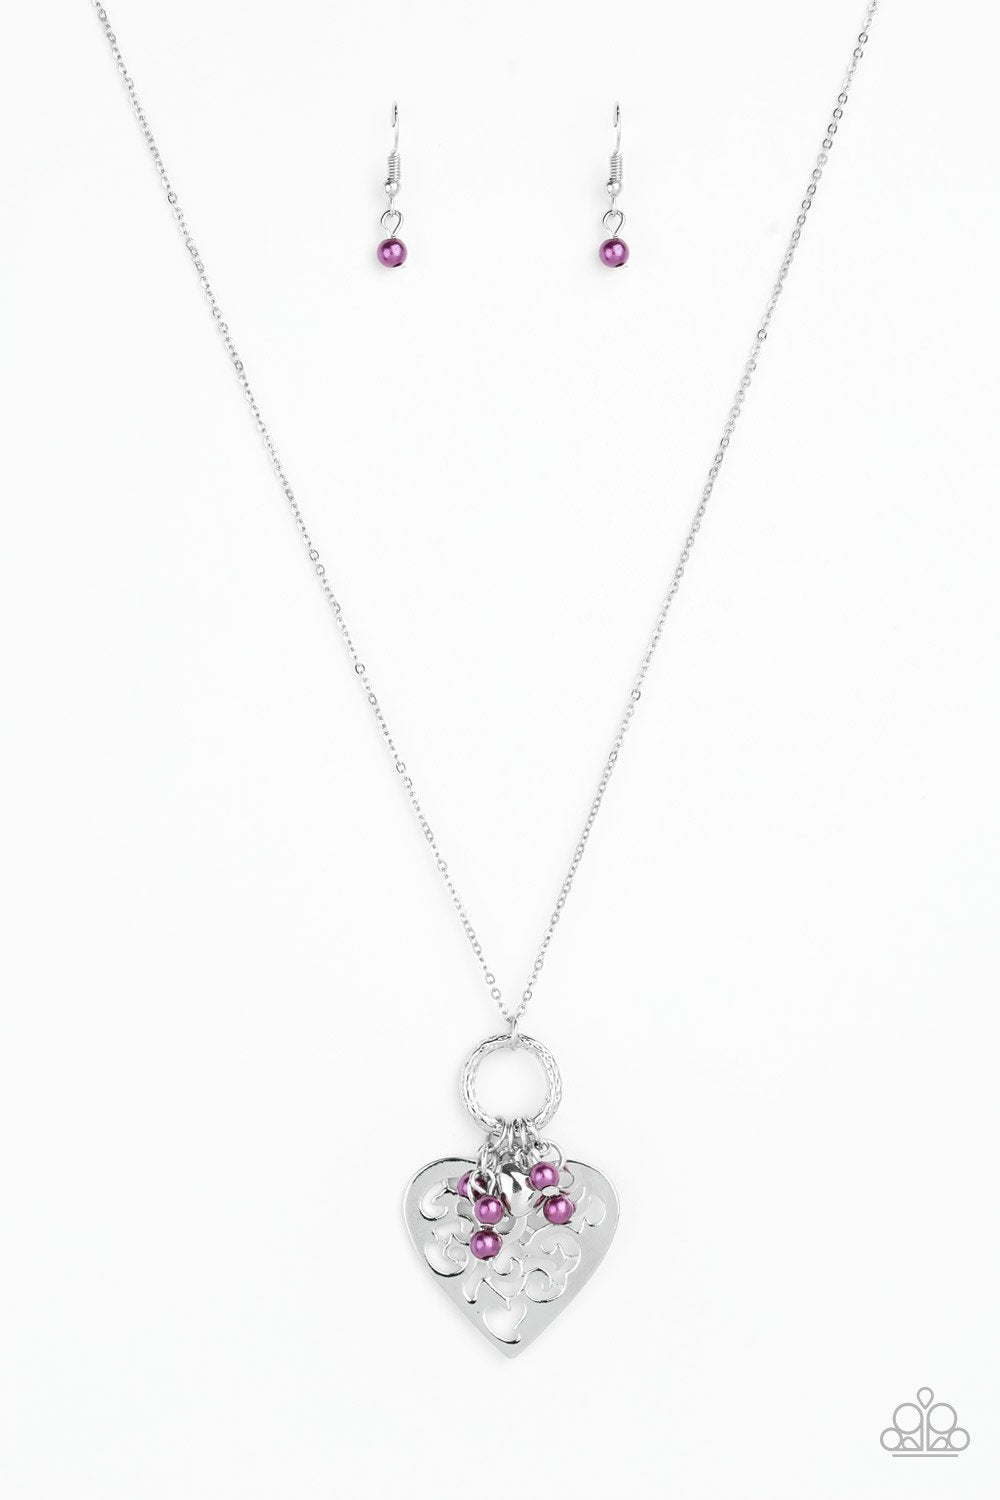 Romeo Romance Purple Pearl Necklace freeshipping - JewLz4u Gemstone Gallery